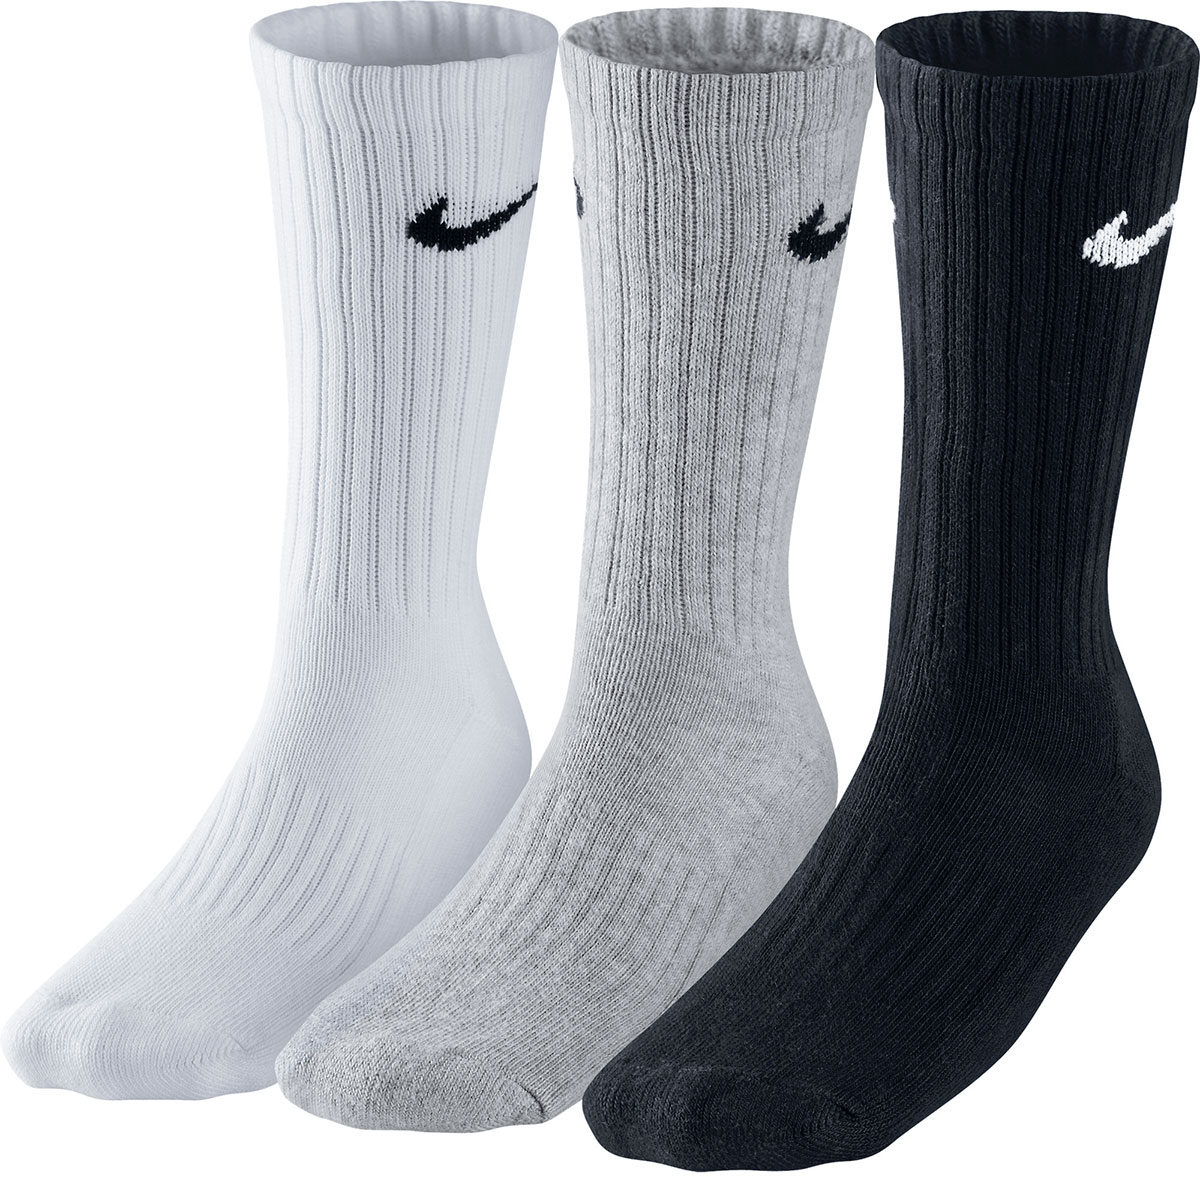 3PPK VALUE COTTON CREW - Sports socks